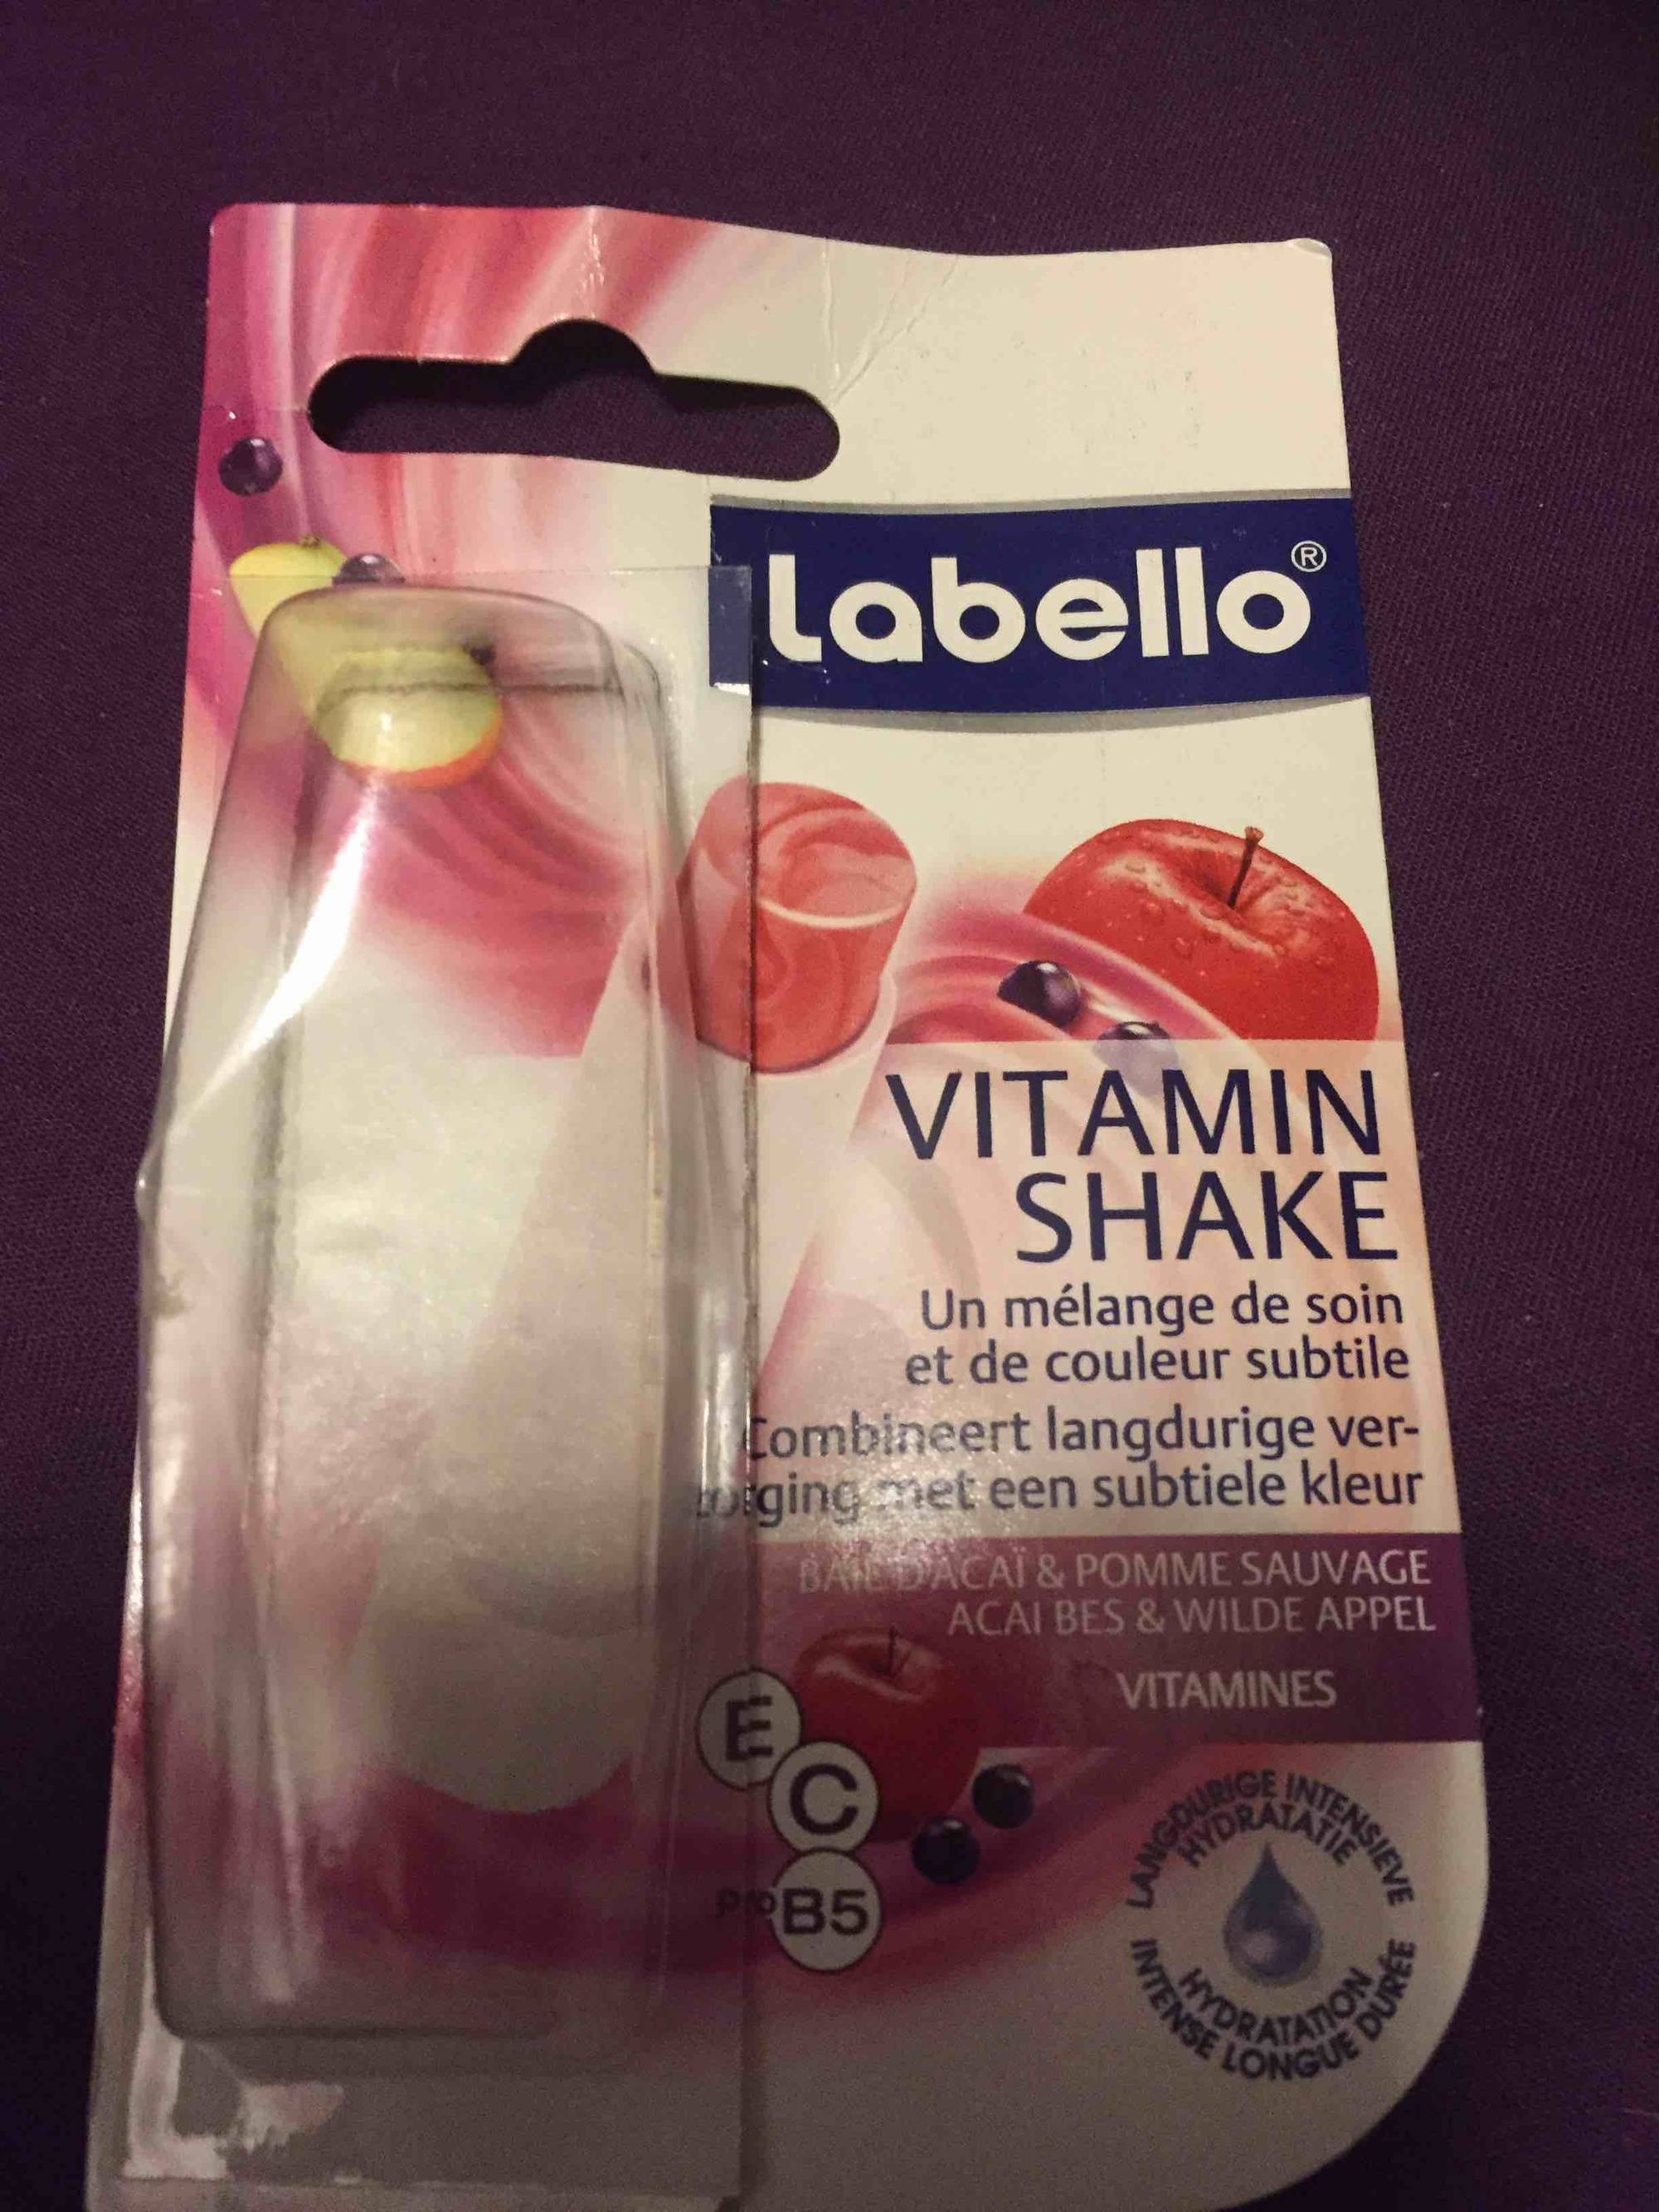 LABELLO - Vitamin shake - Bai d'Acai & Pomme Sauvage